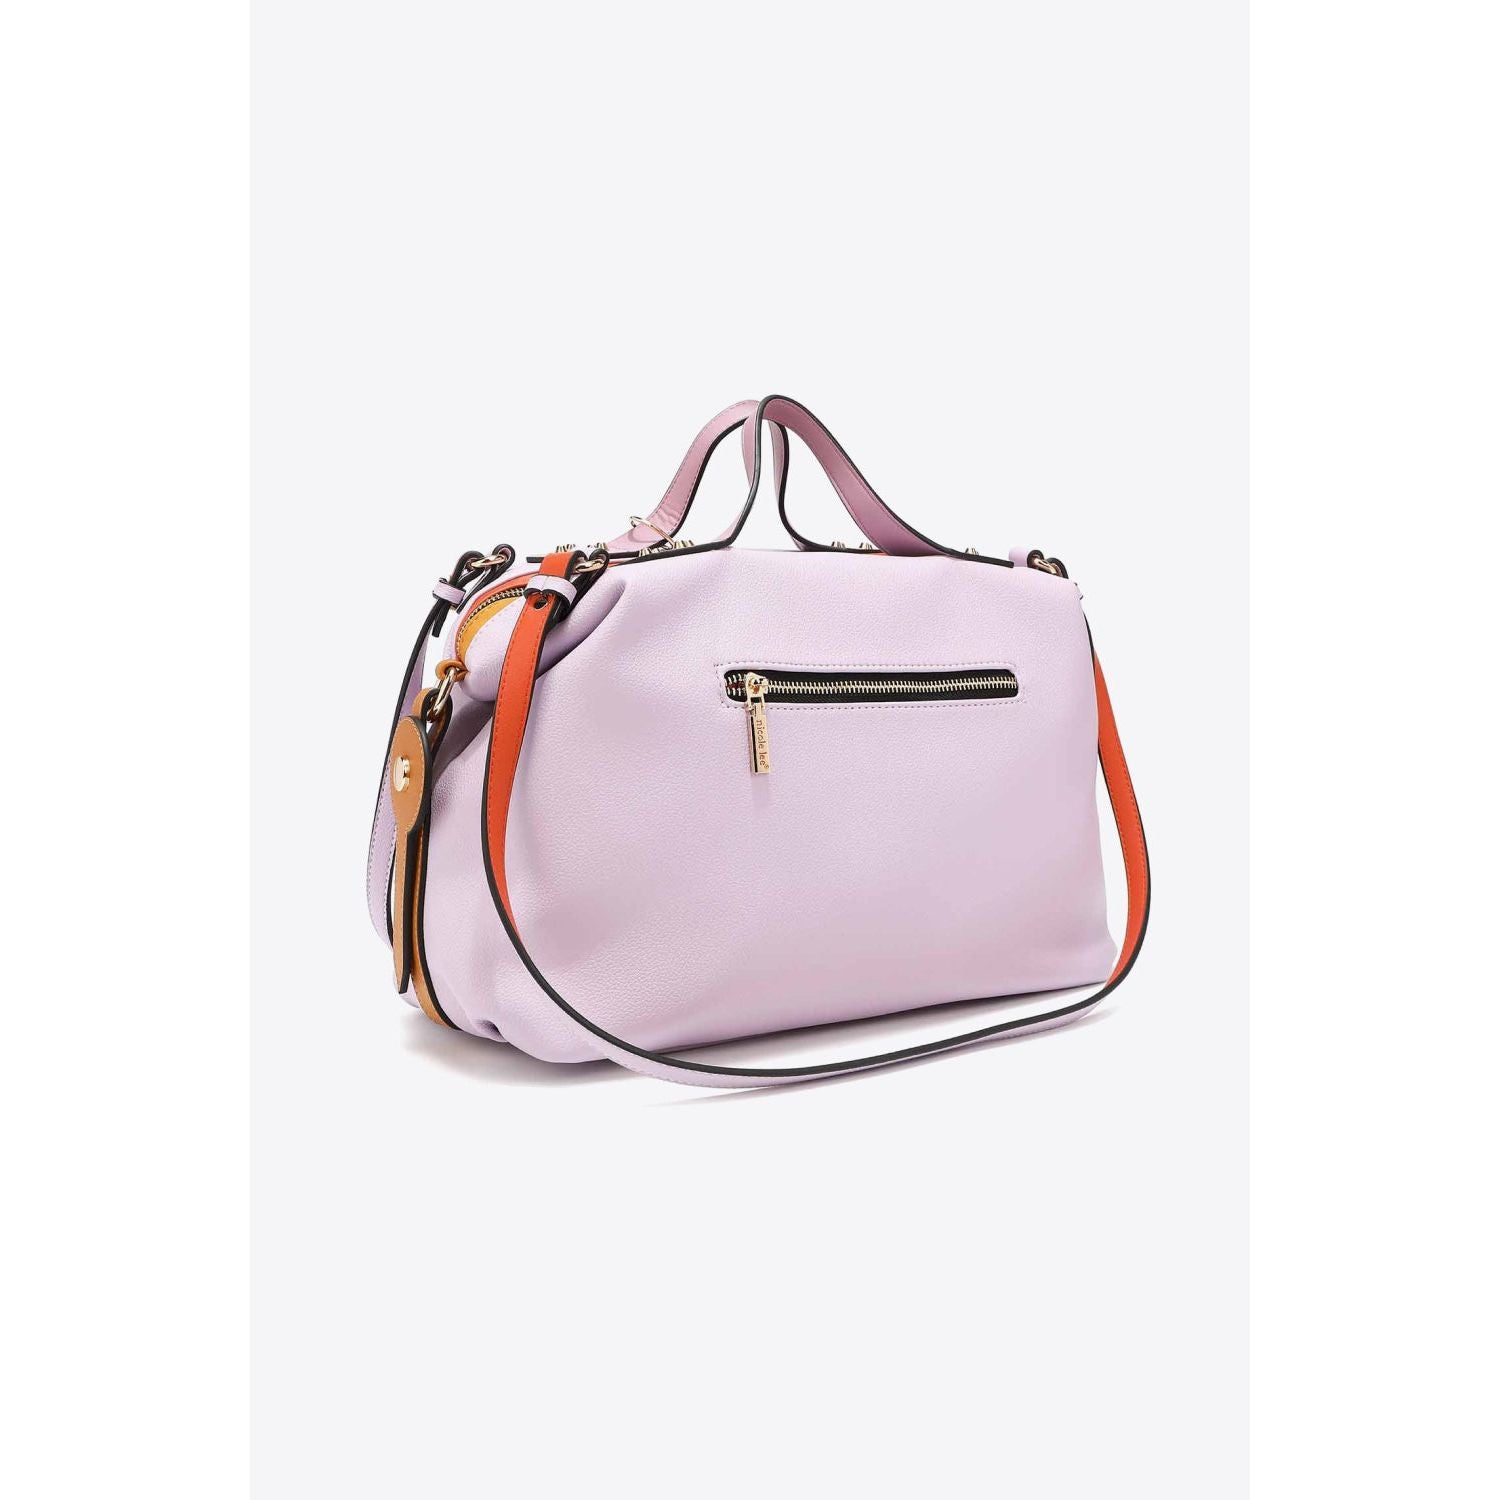 Nicole Lee USA Avery Multi Strap Boston Bag - TiffanyzKlozet